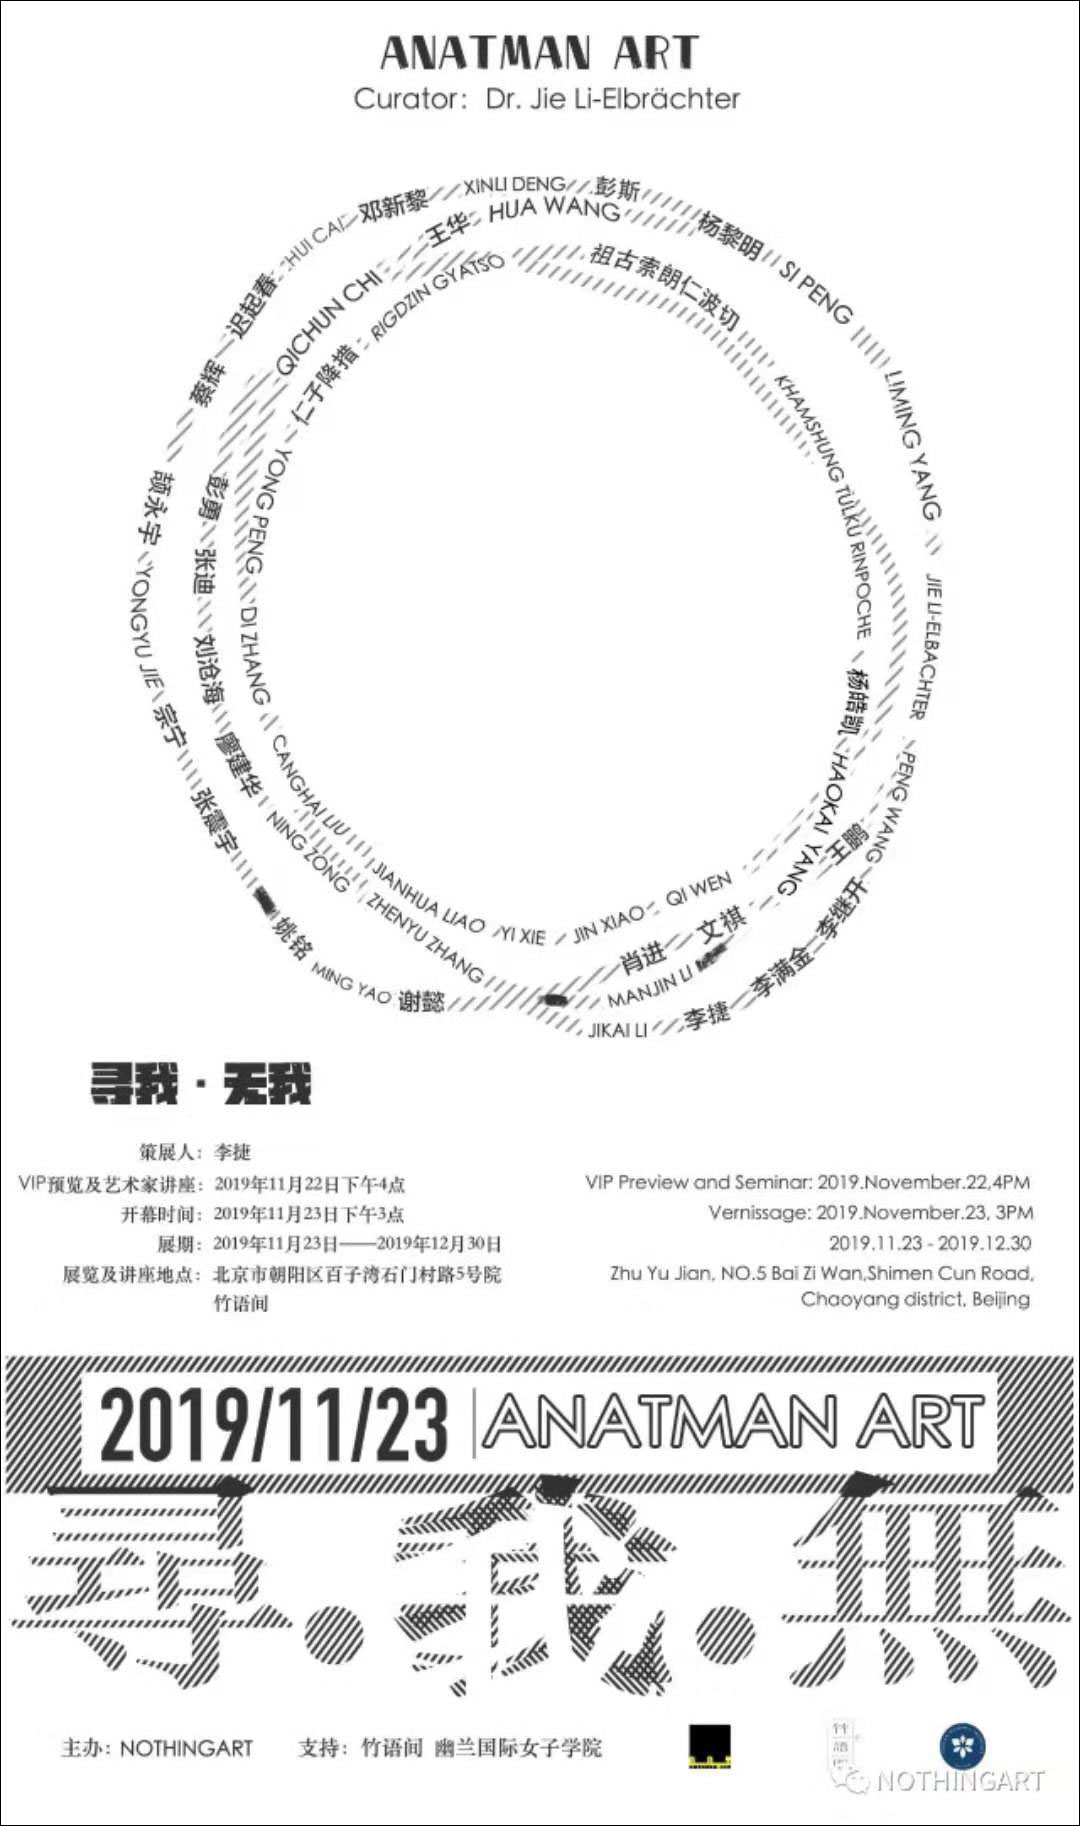 •  2019 INVITATION TO ANATMAN ART